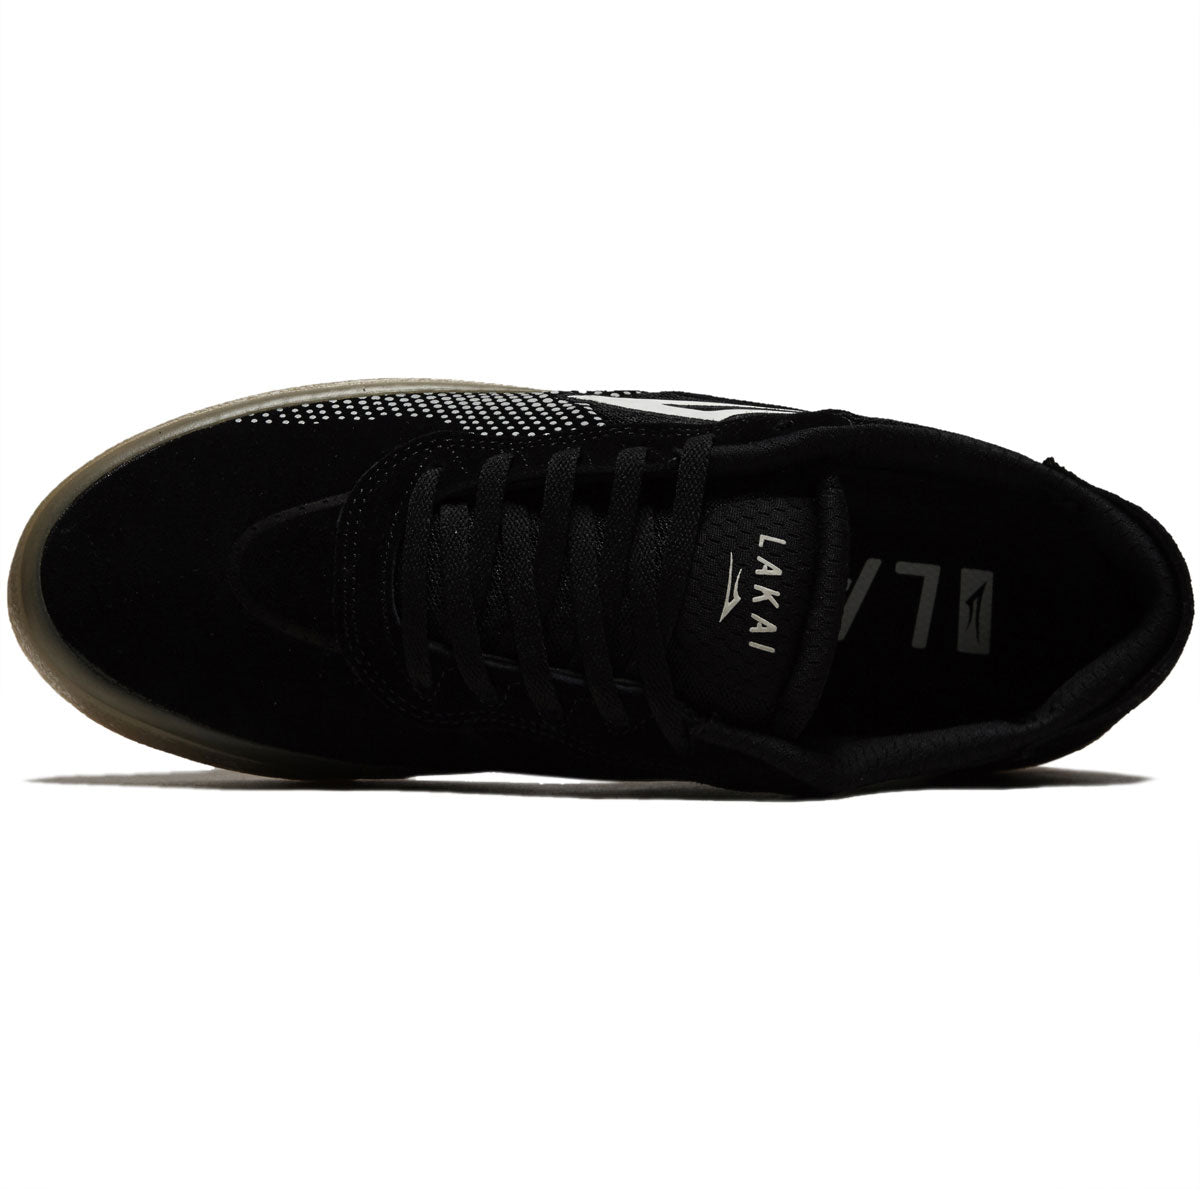 Lakai Essex Shoes - Black/Glow Suede image 3